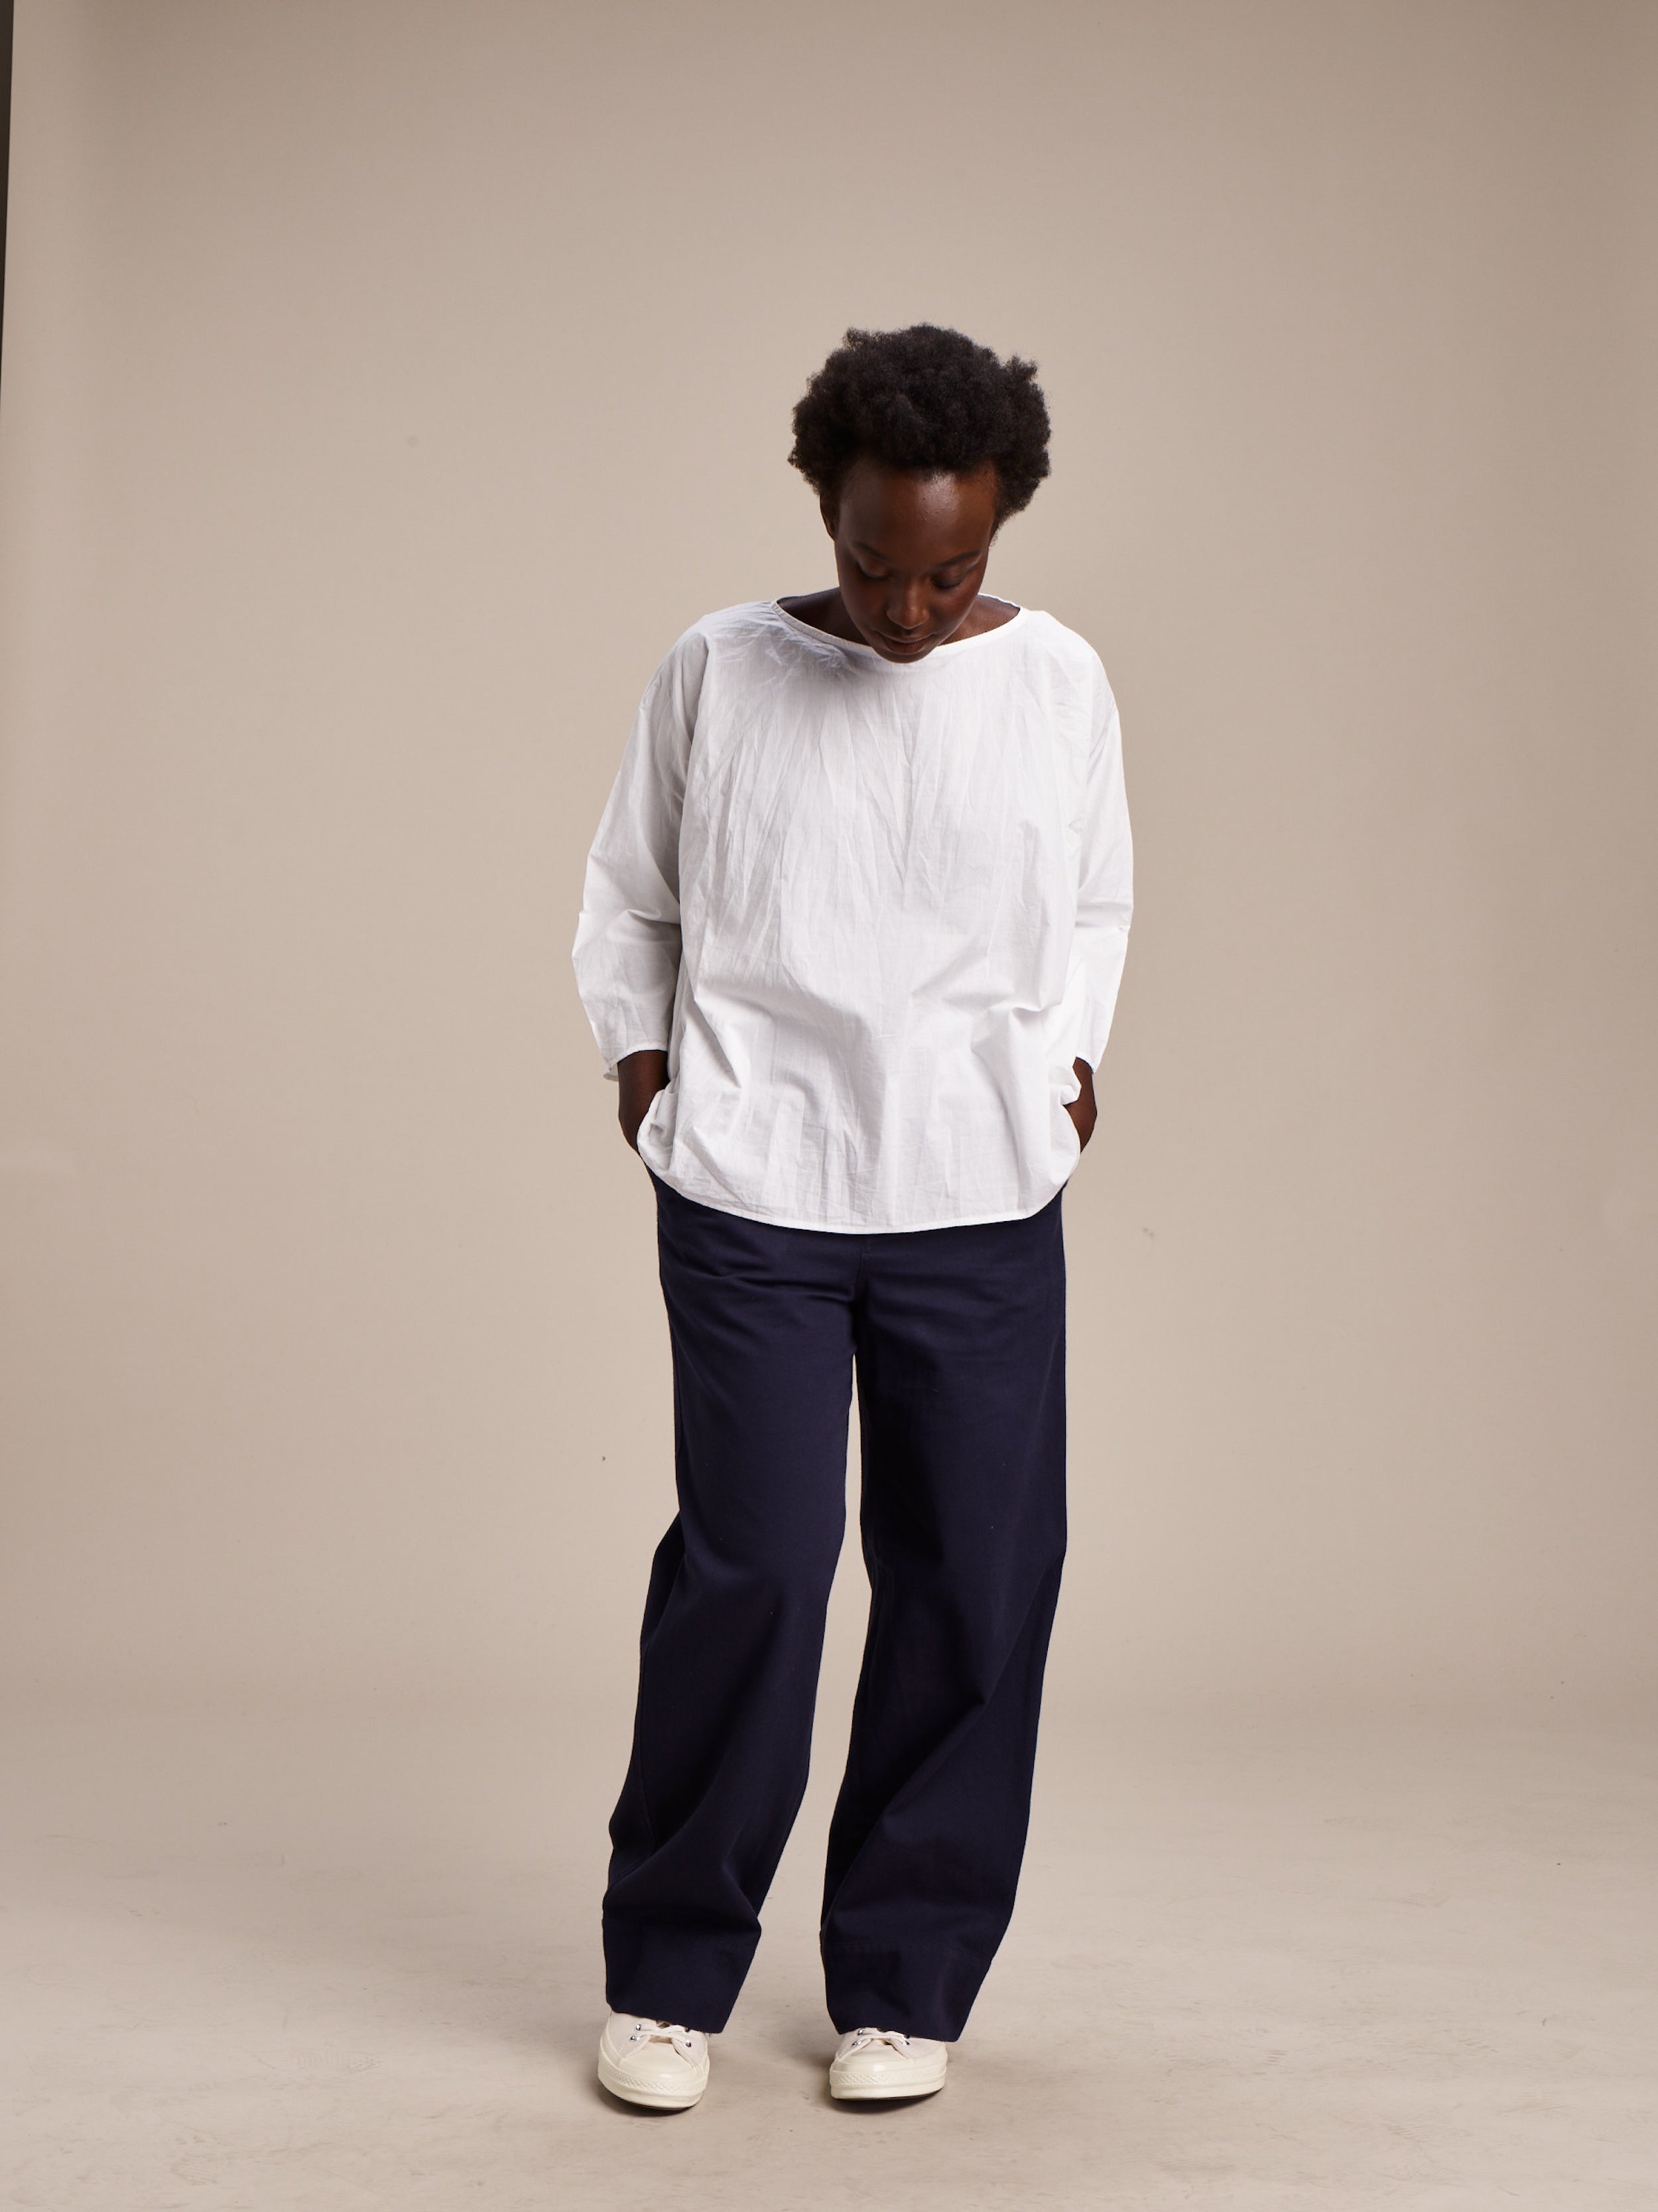 Woman wears Carrier Company White Cotton Tee Shirt